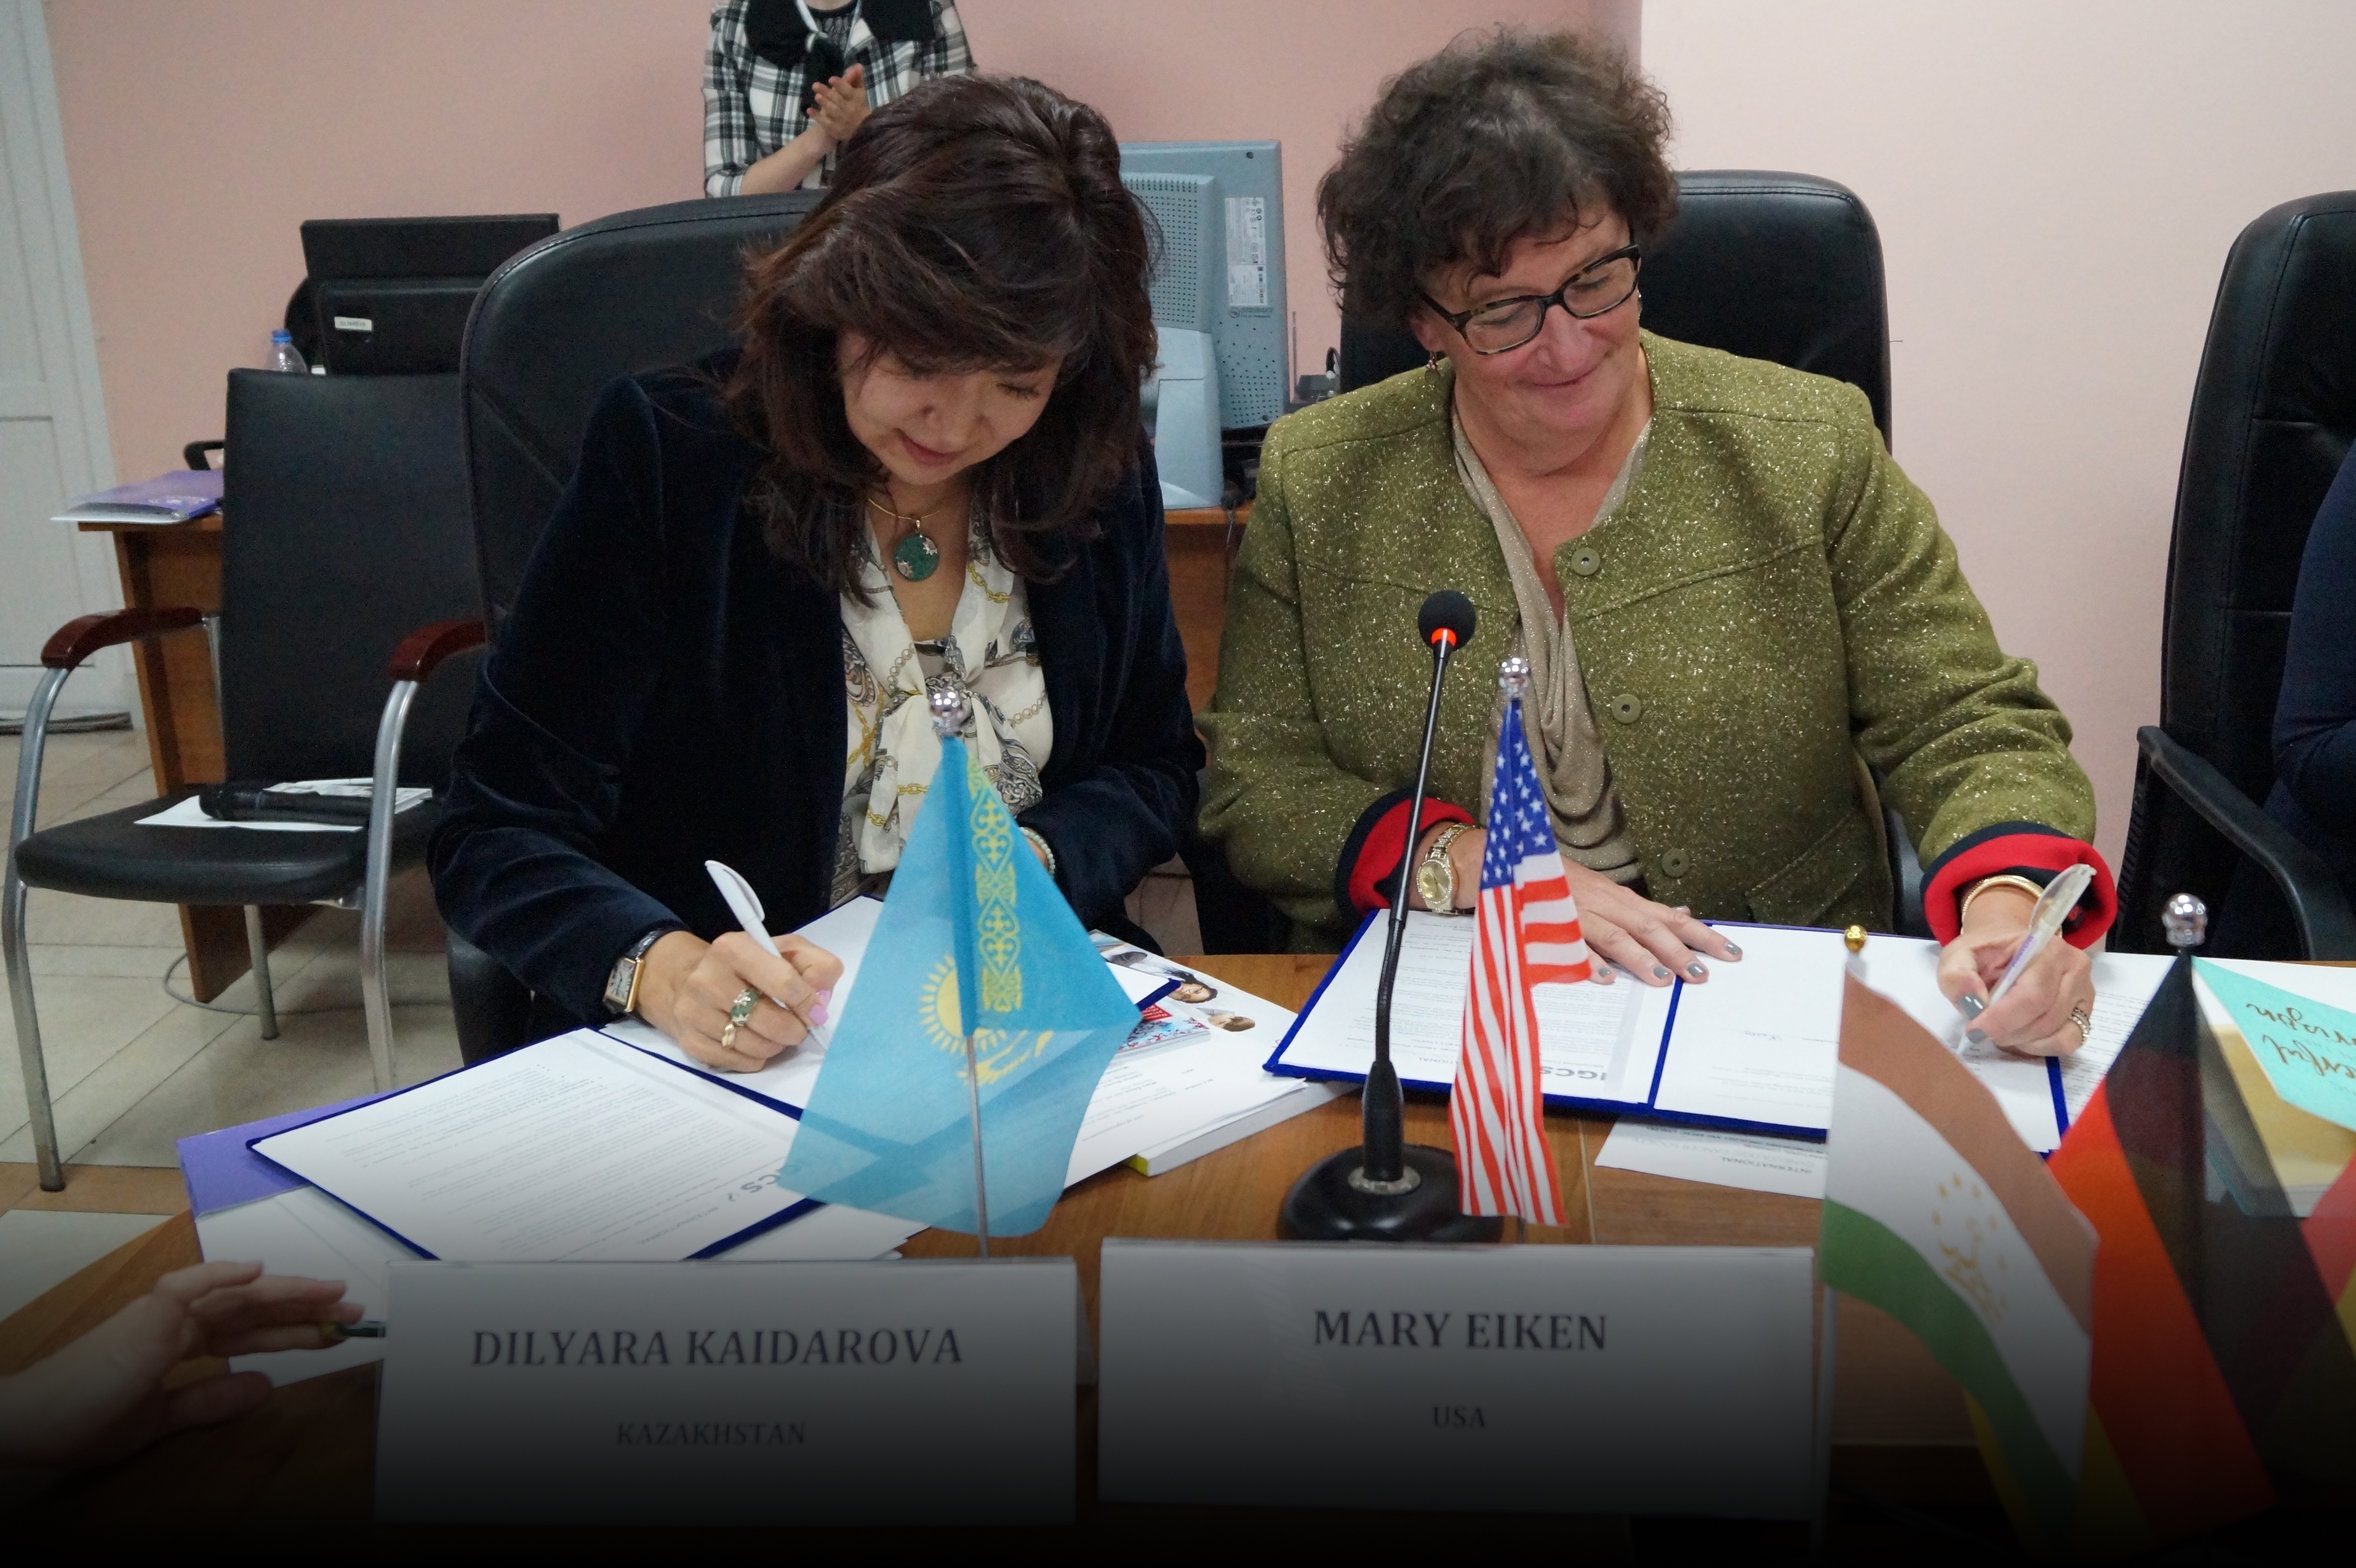  Kazakhstan and Uzbekistan join the IGCS Strategic Alliance Partnership in Almaty, Kazakhstan, 2017 